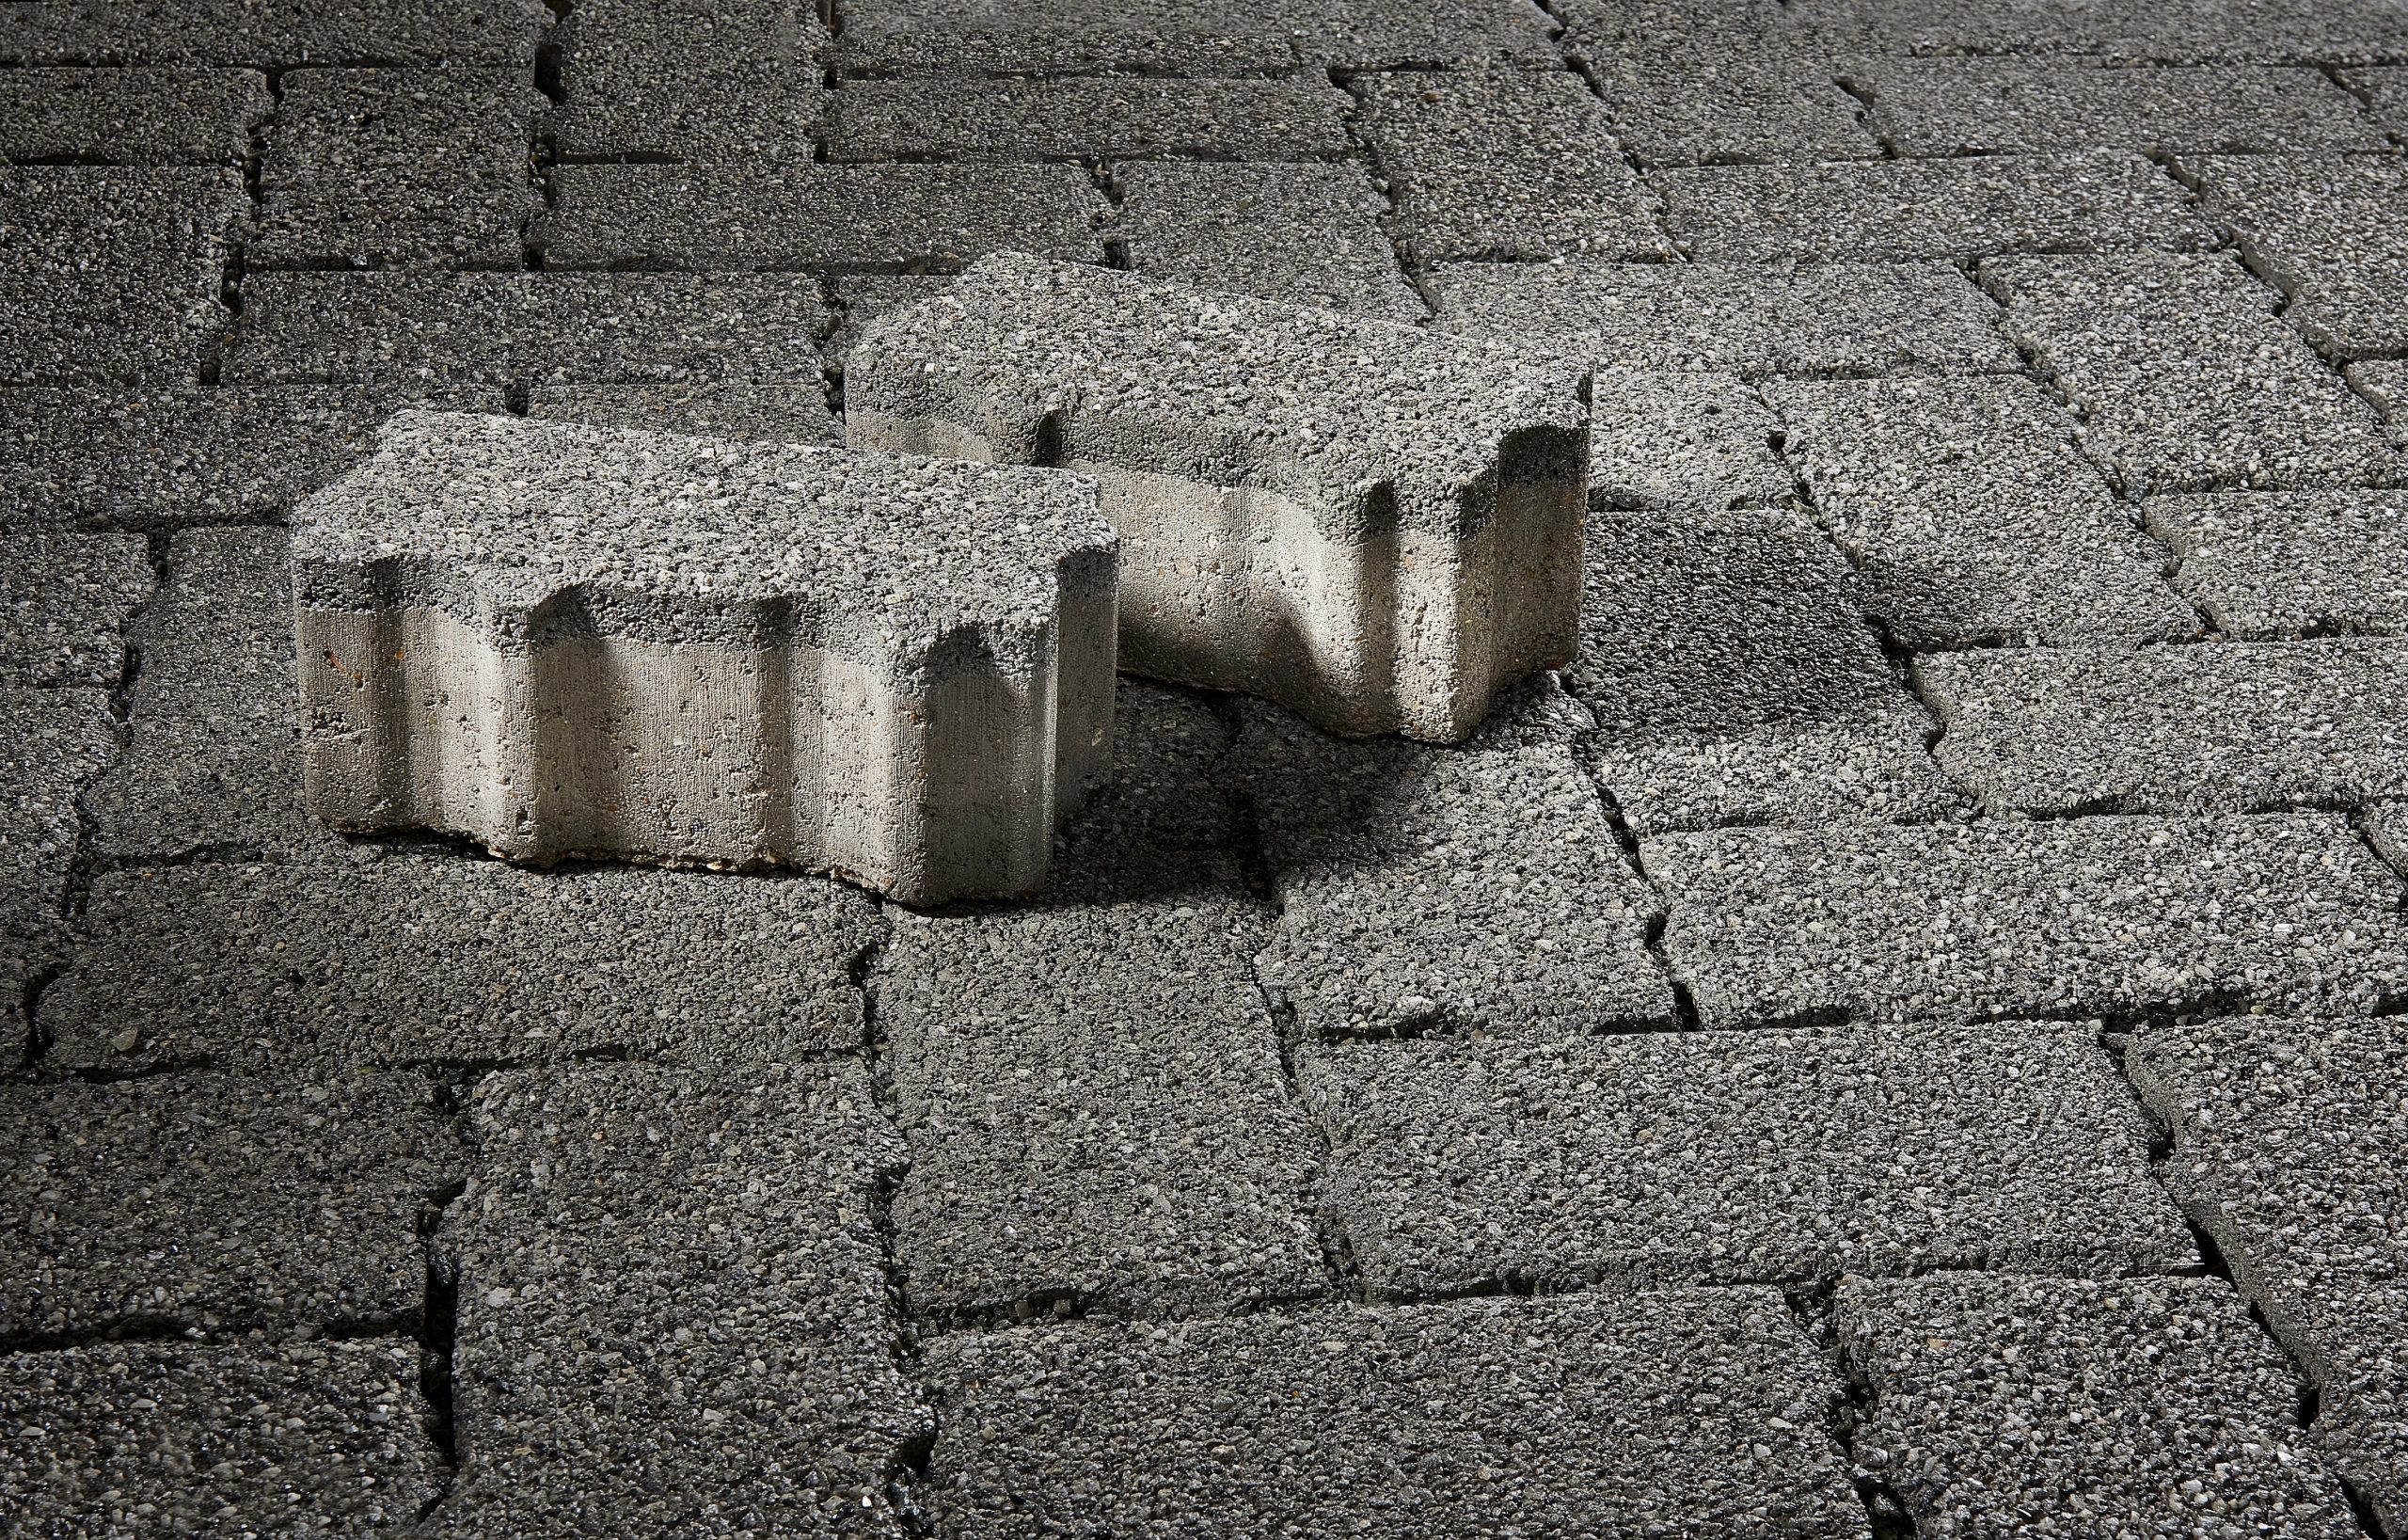 permeable block paving | permeable paving | granite pavers | granite block paving | is block paving permeable | what is permeable paving | brett permeable block paving | suds | drainage pavers | sustainable paving | eco friendly pavers